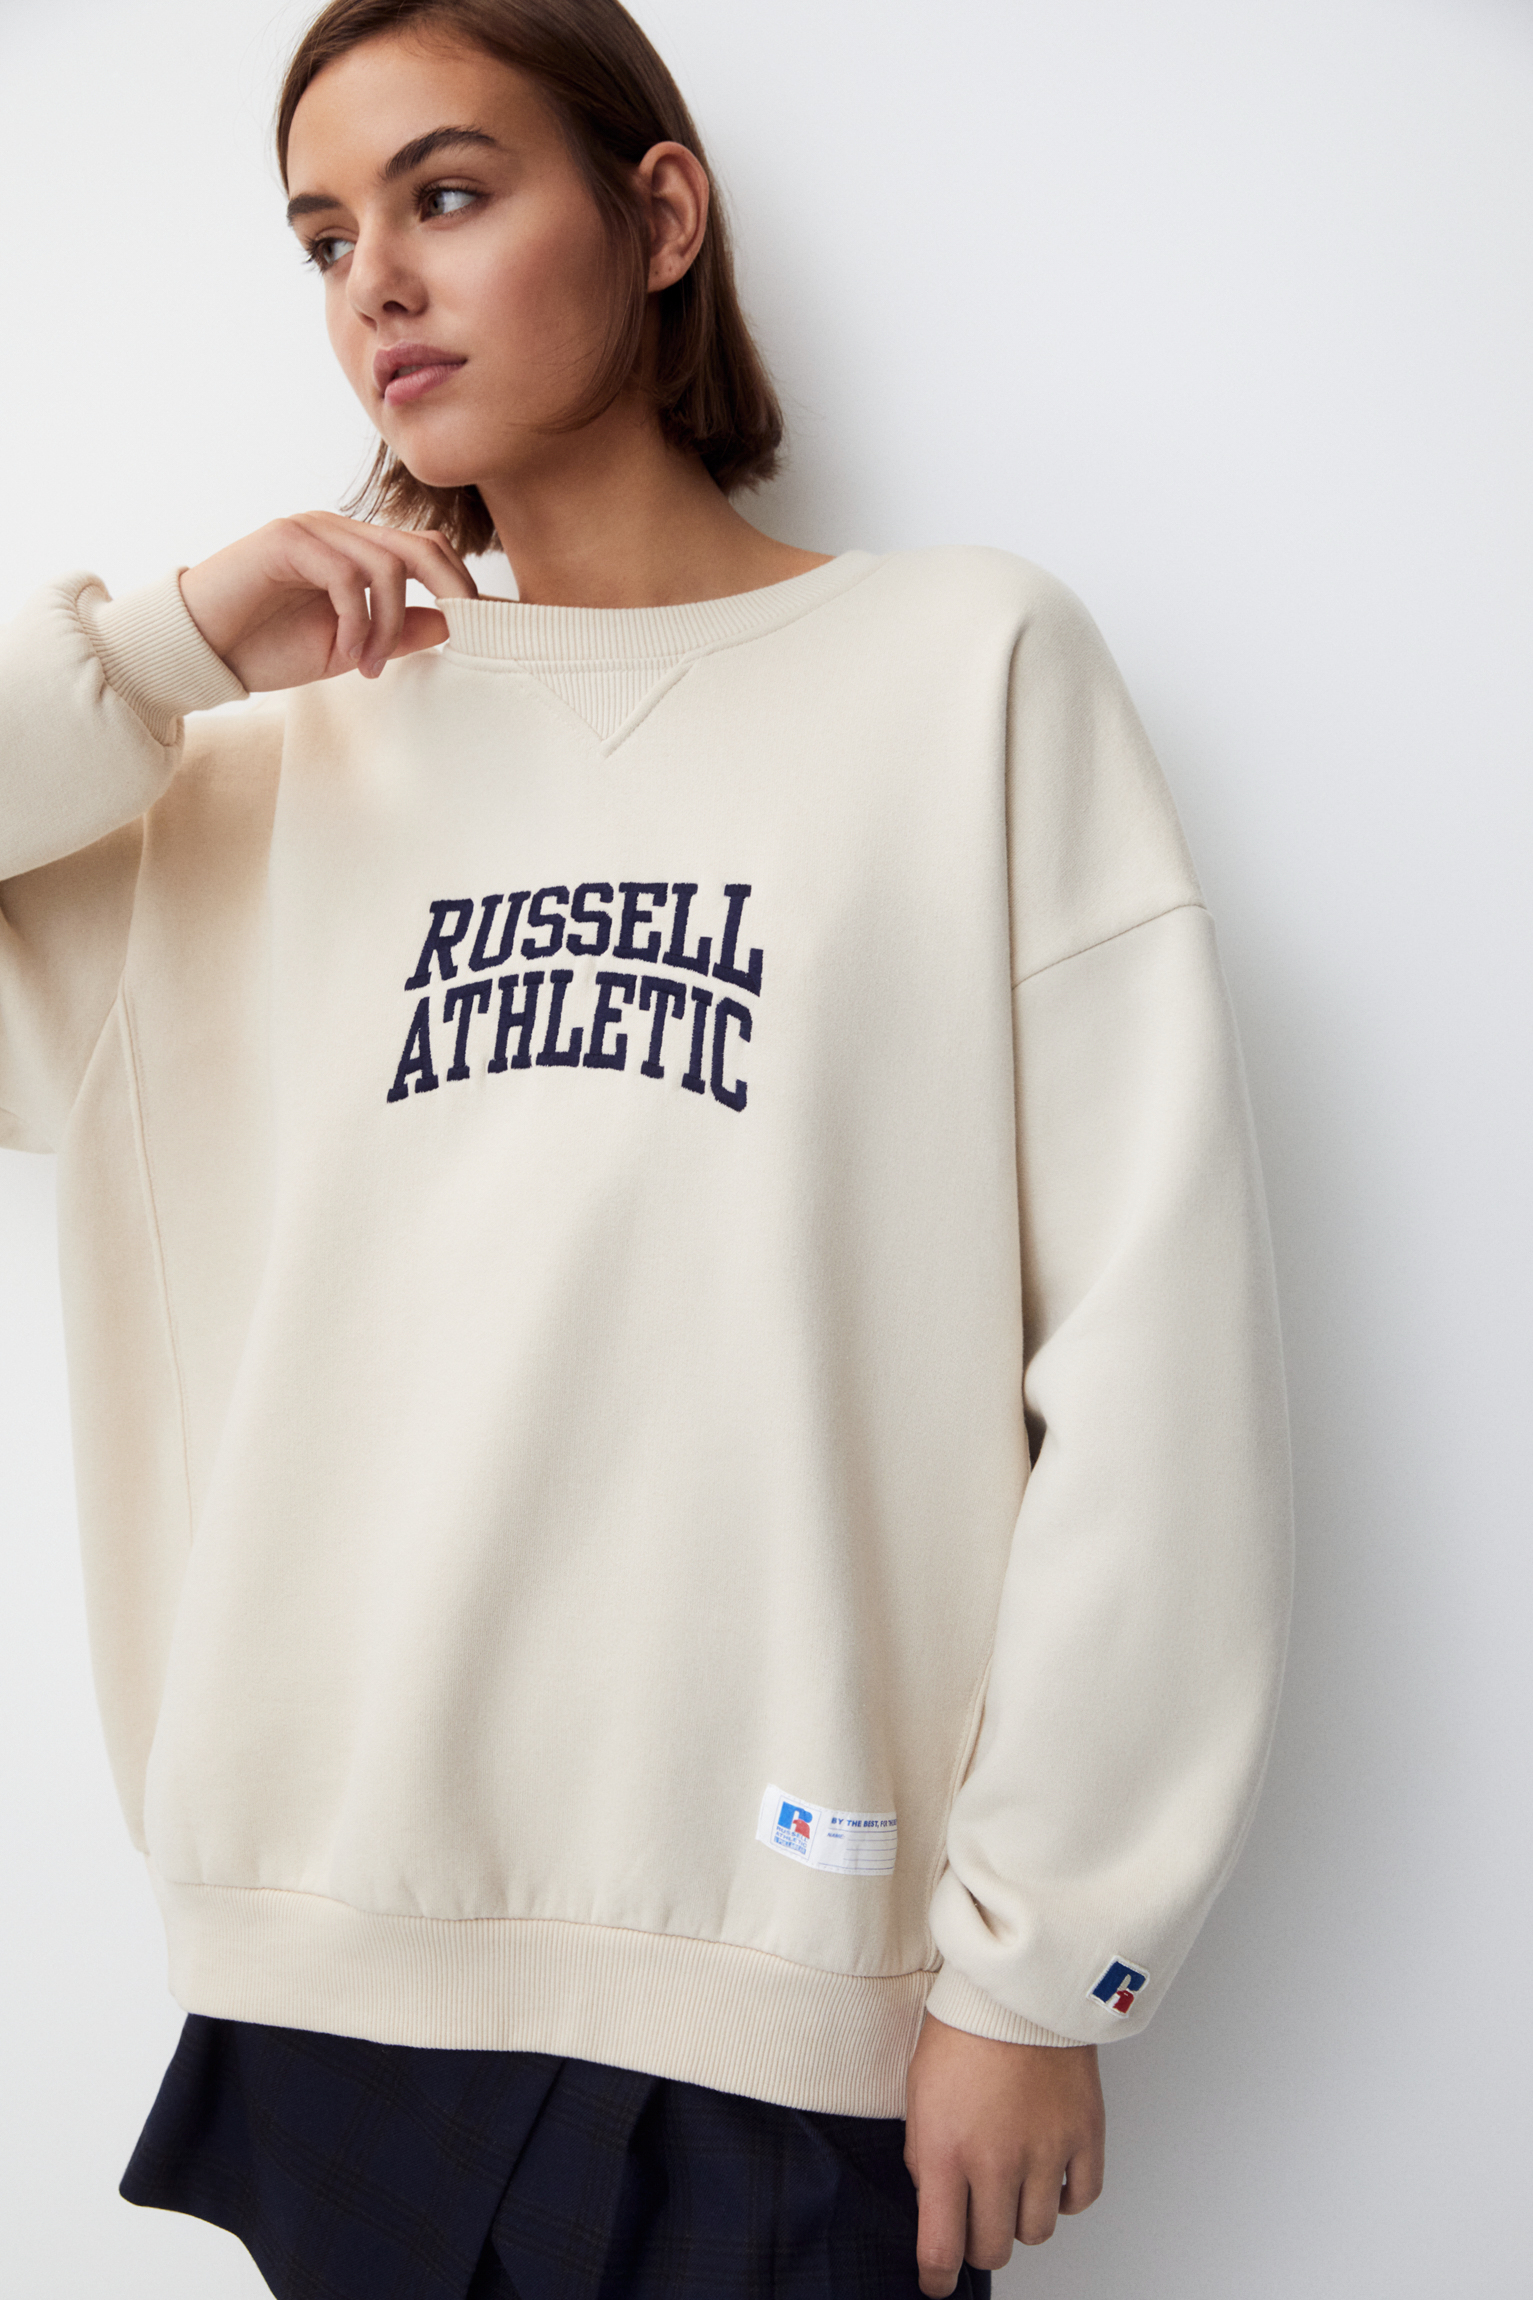 Russell Athletic by P&B sweatshirt - PULL&BEAR